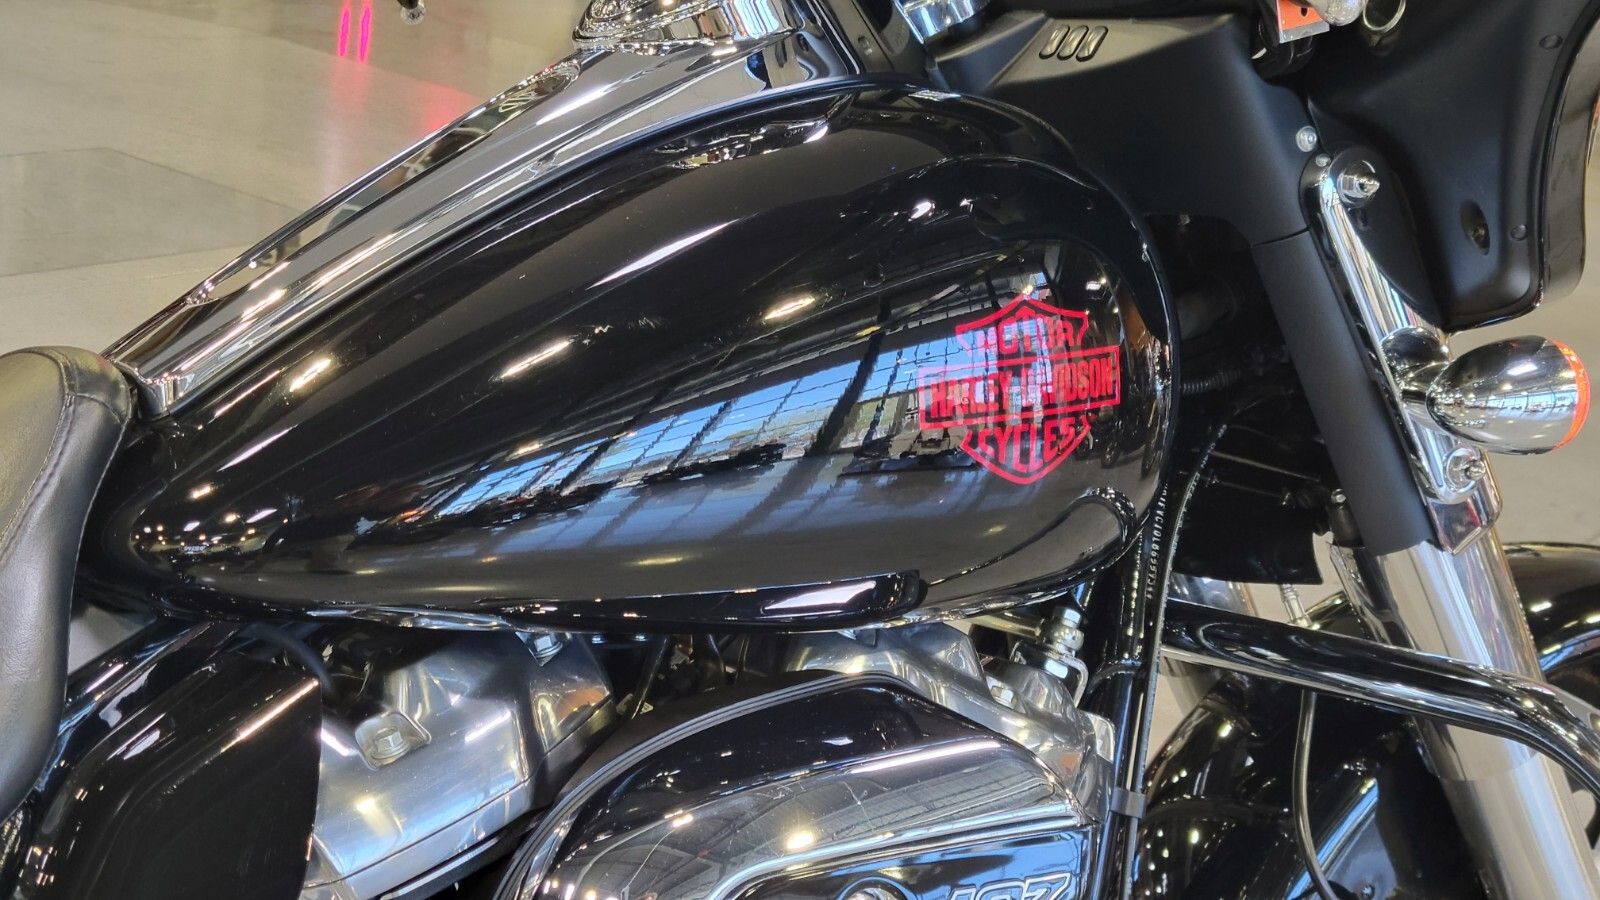 2020 Harley-Davidson Electra Glide® Standard in Las Vegas, Nevada - Photo 3